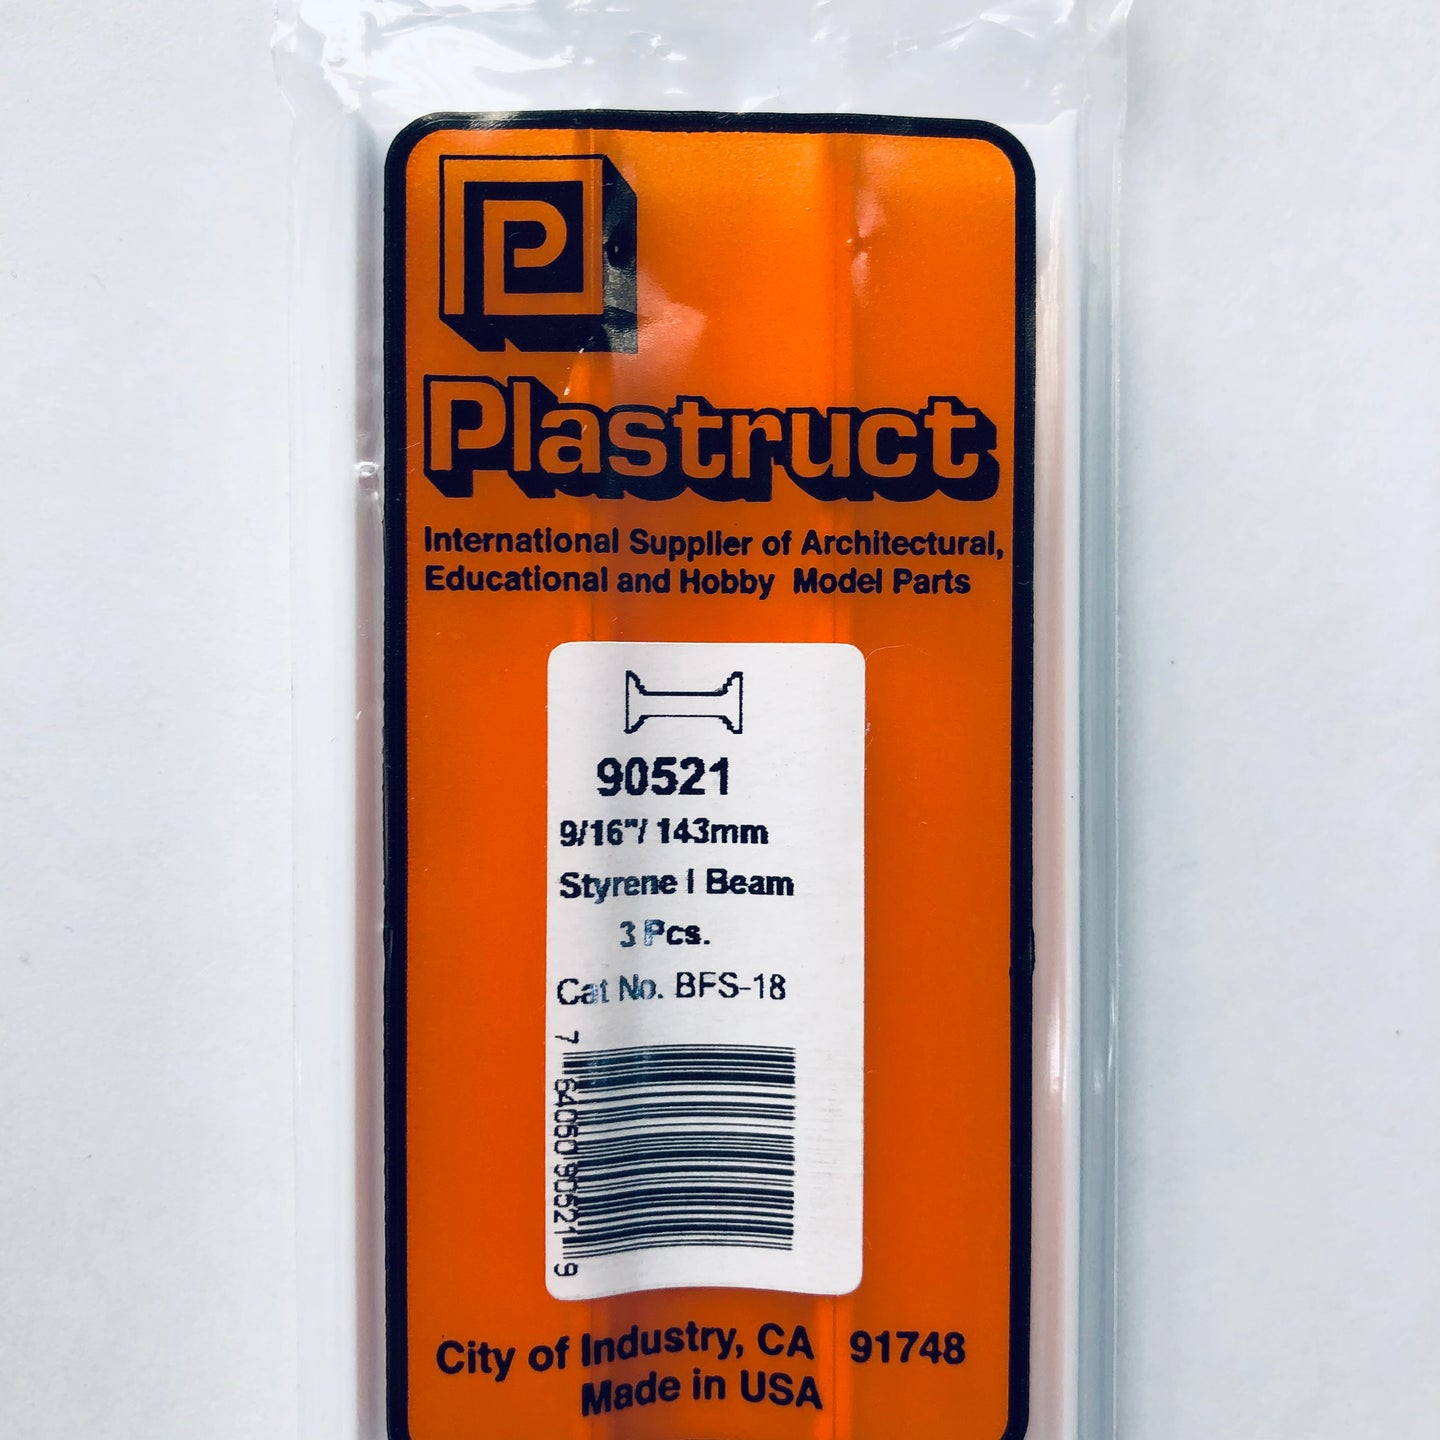 Plastruct 90521 Styrene I Beam 9/16